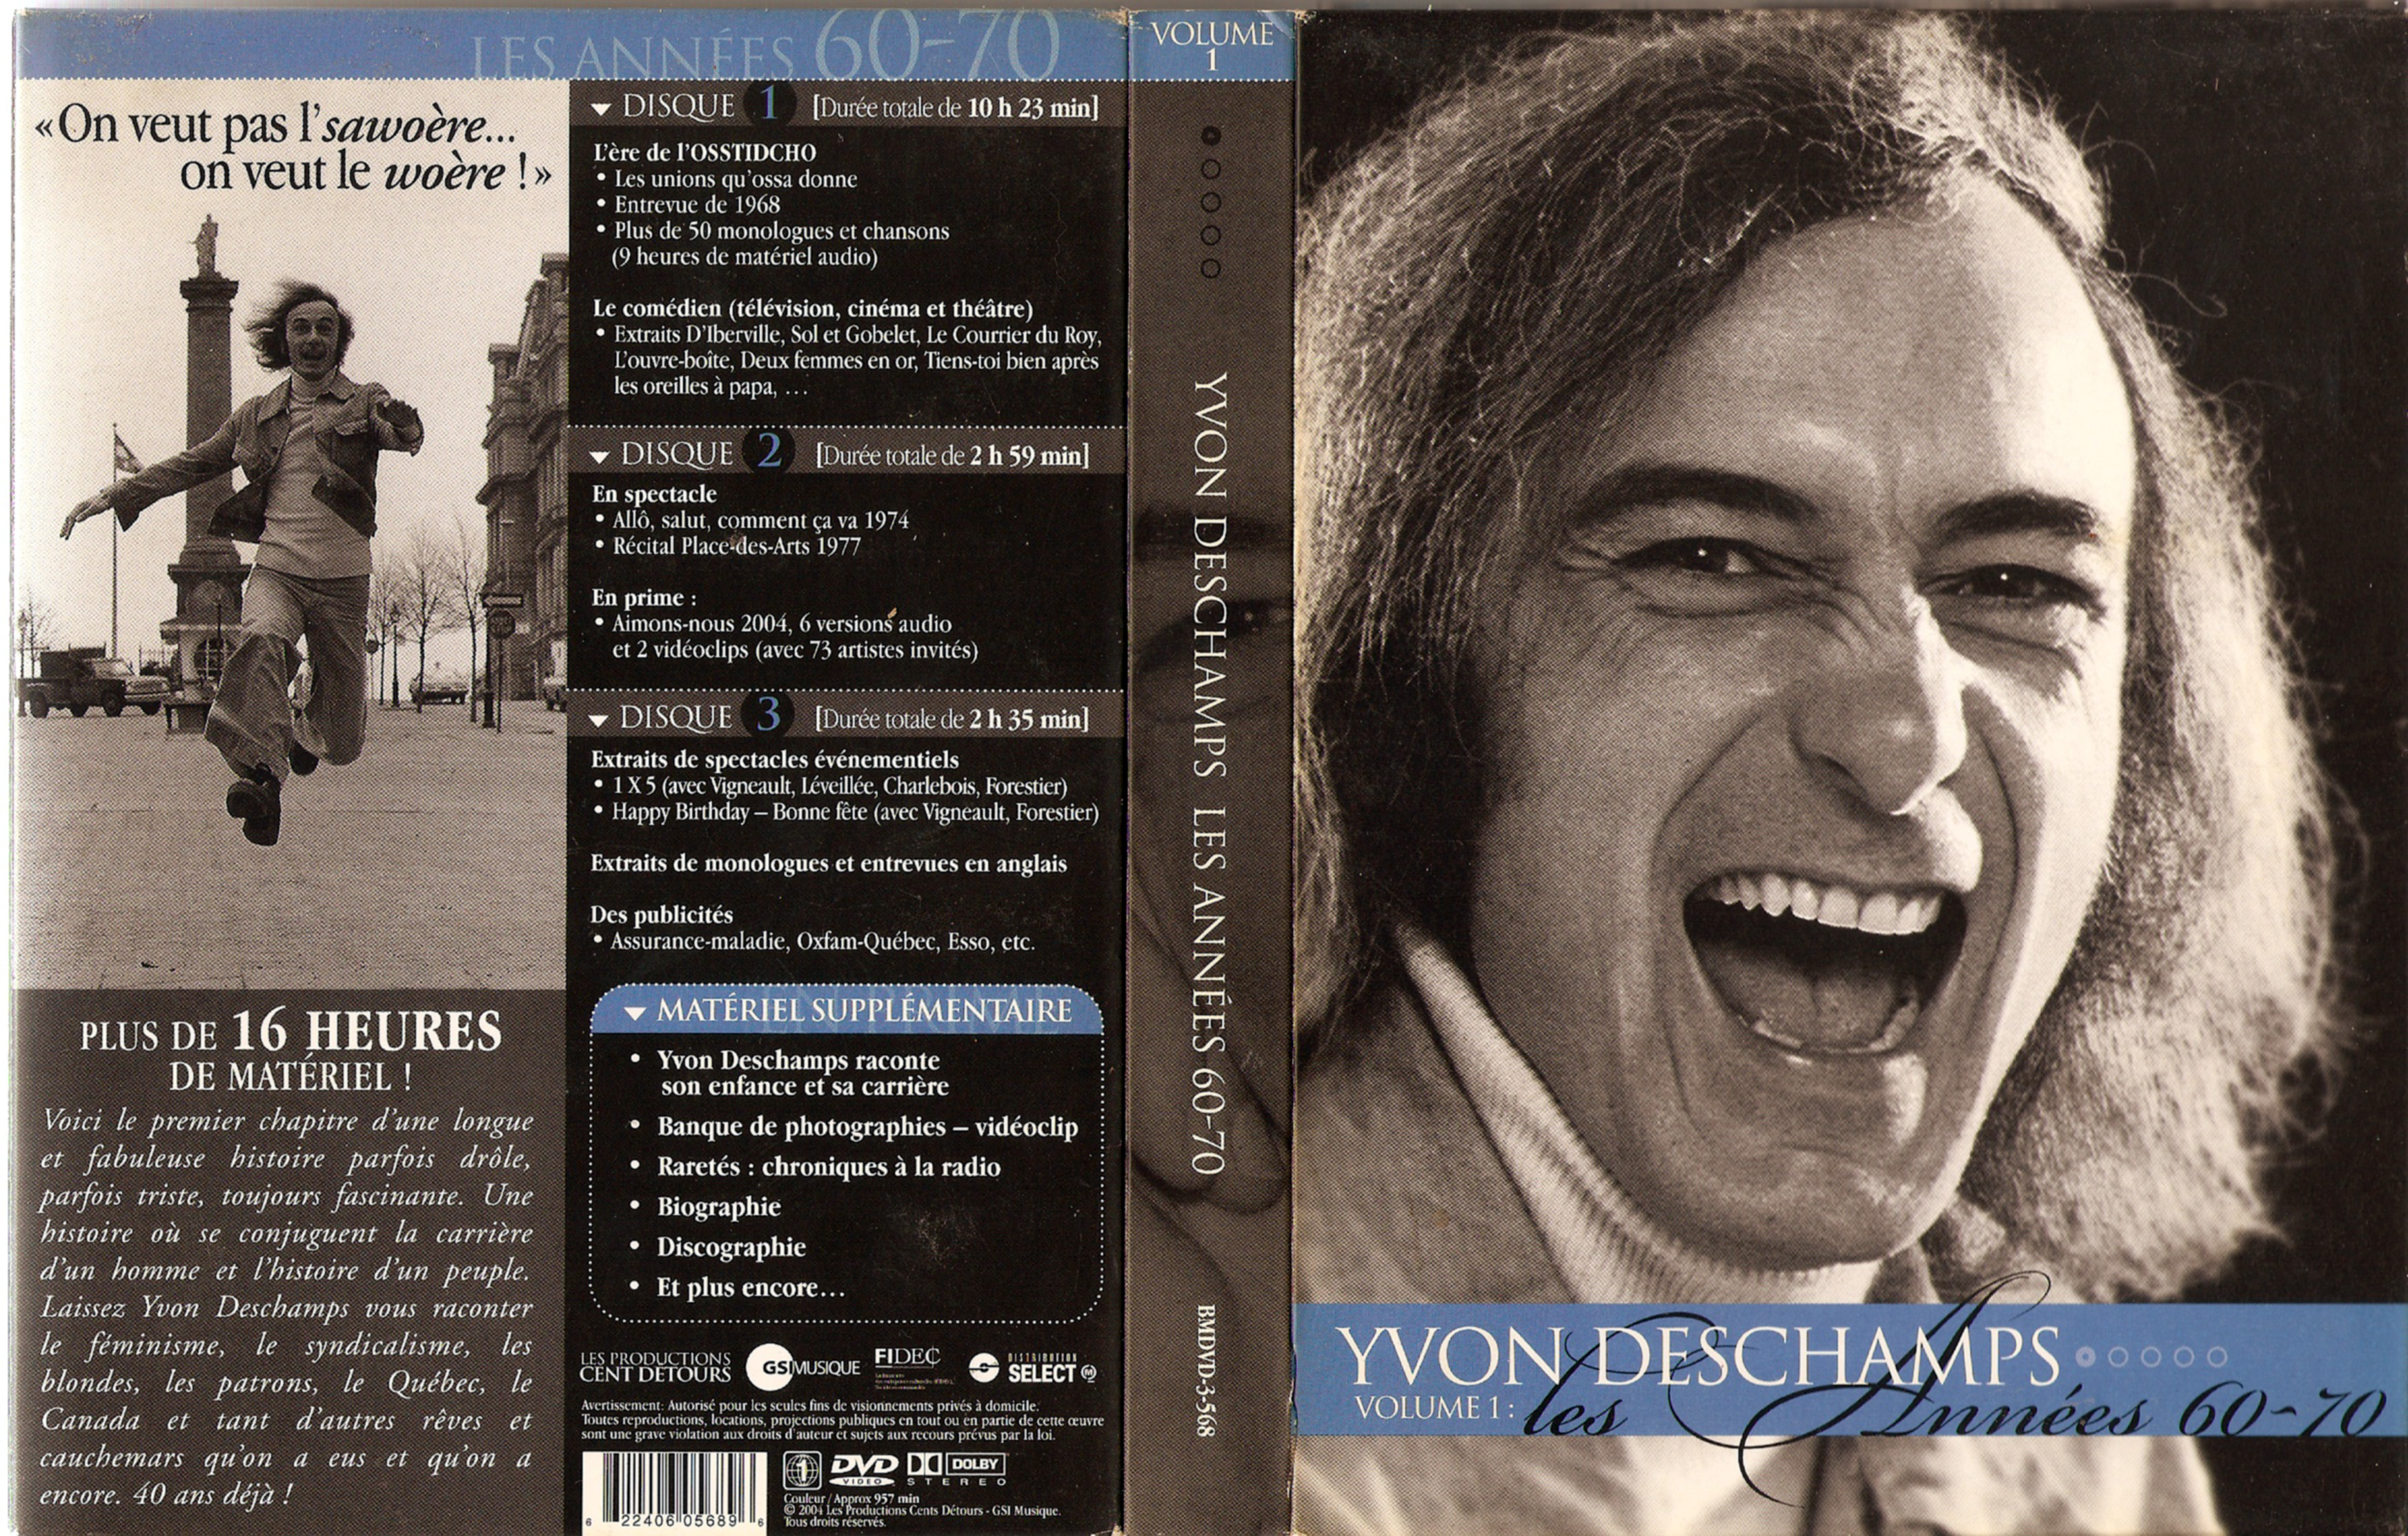 Jaquette DVD Yvon Deschamps vol 1